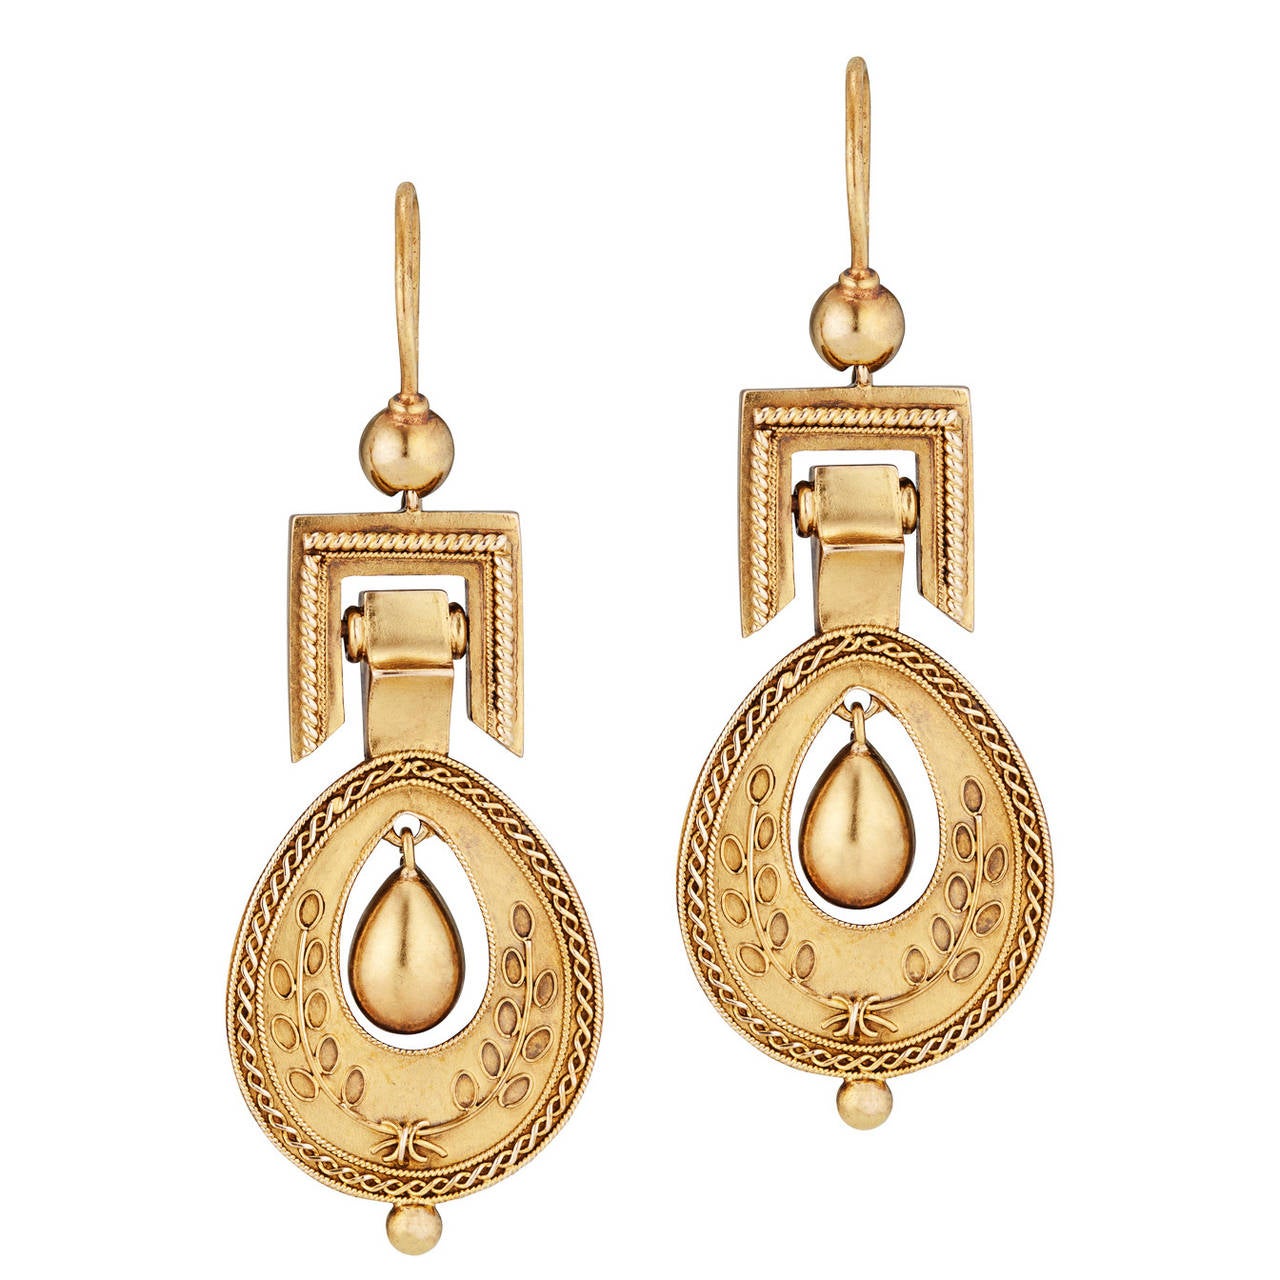 Victorian Etruscan Gold Earrings